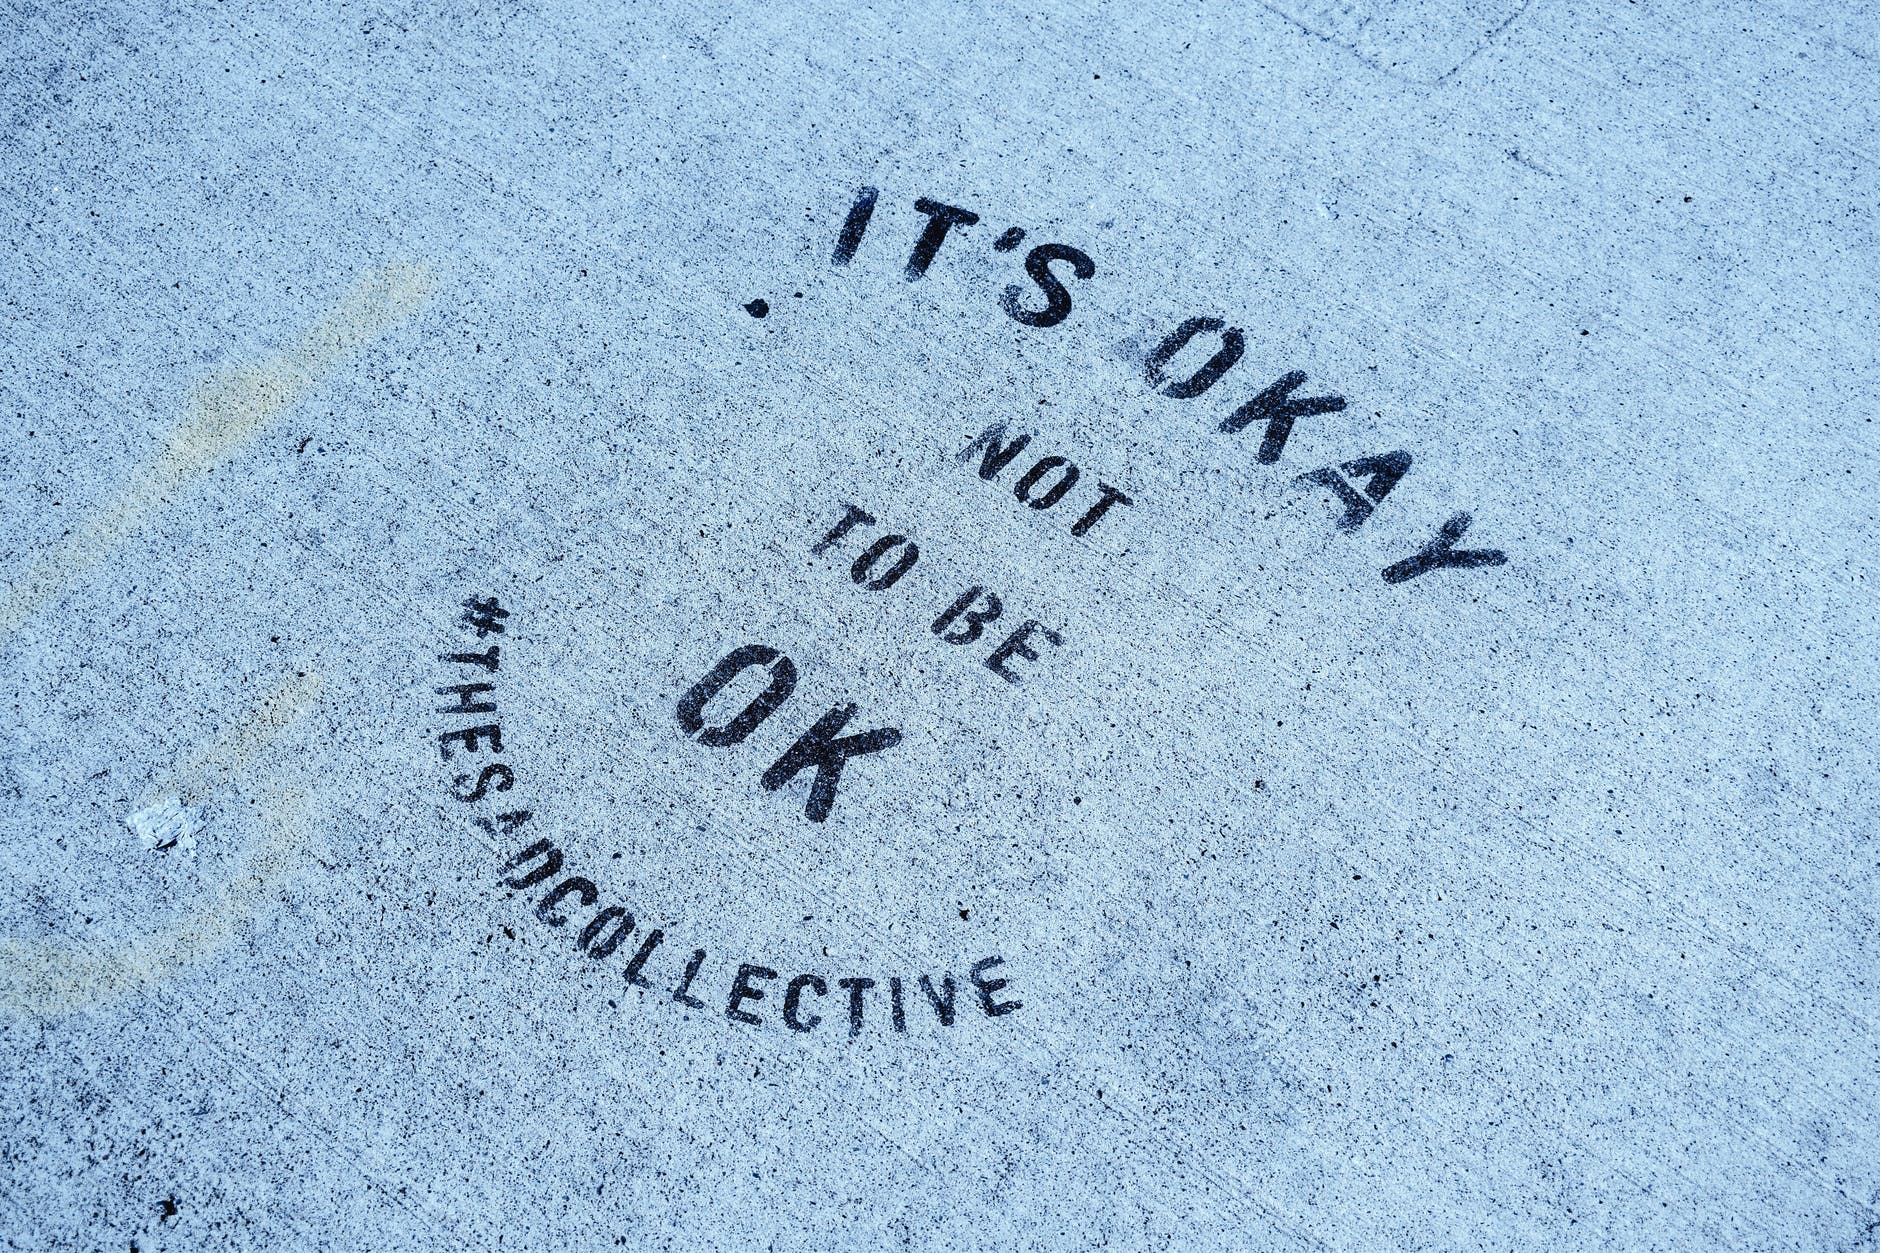 inspirational message on blue concrete pavement